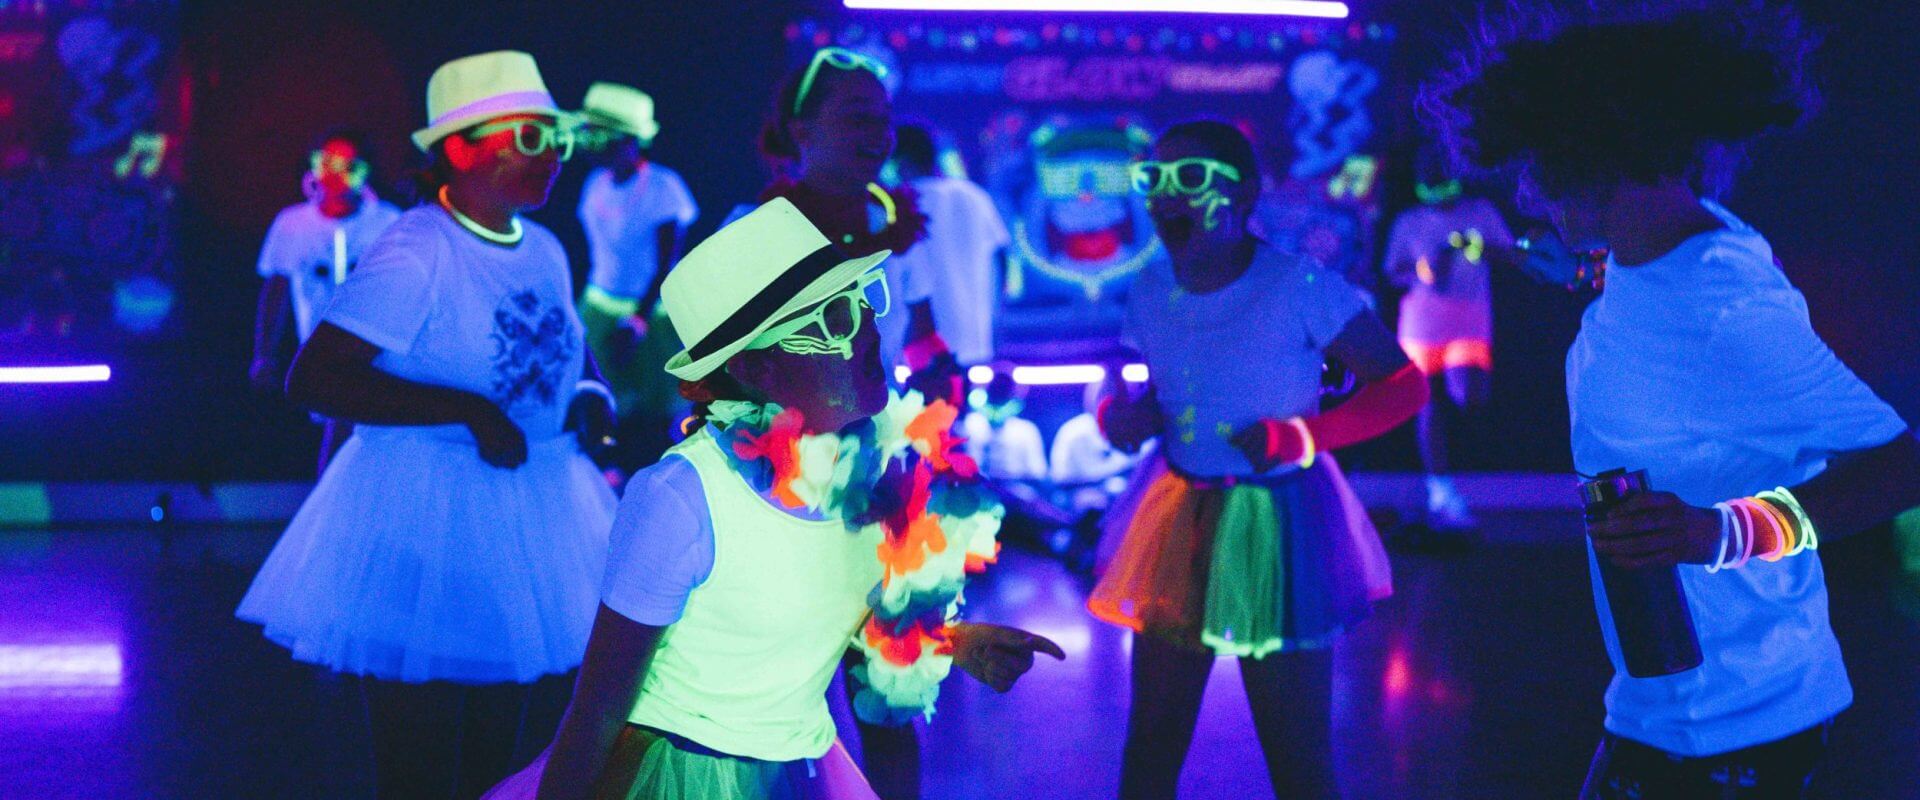 Glowtastic Disco Party parallax image